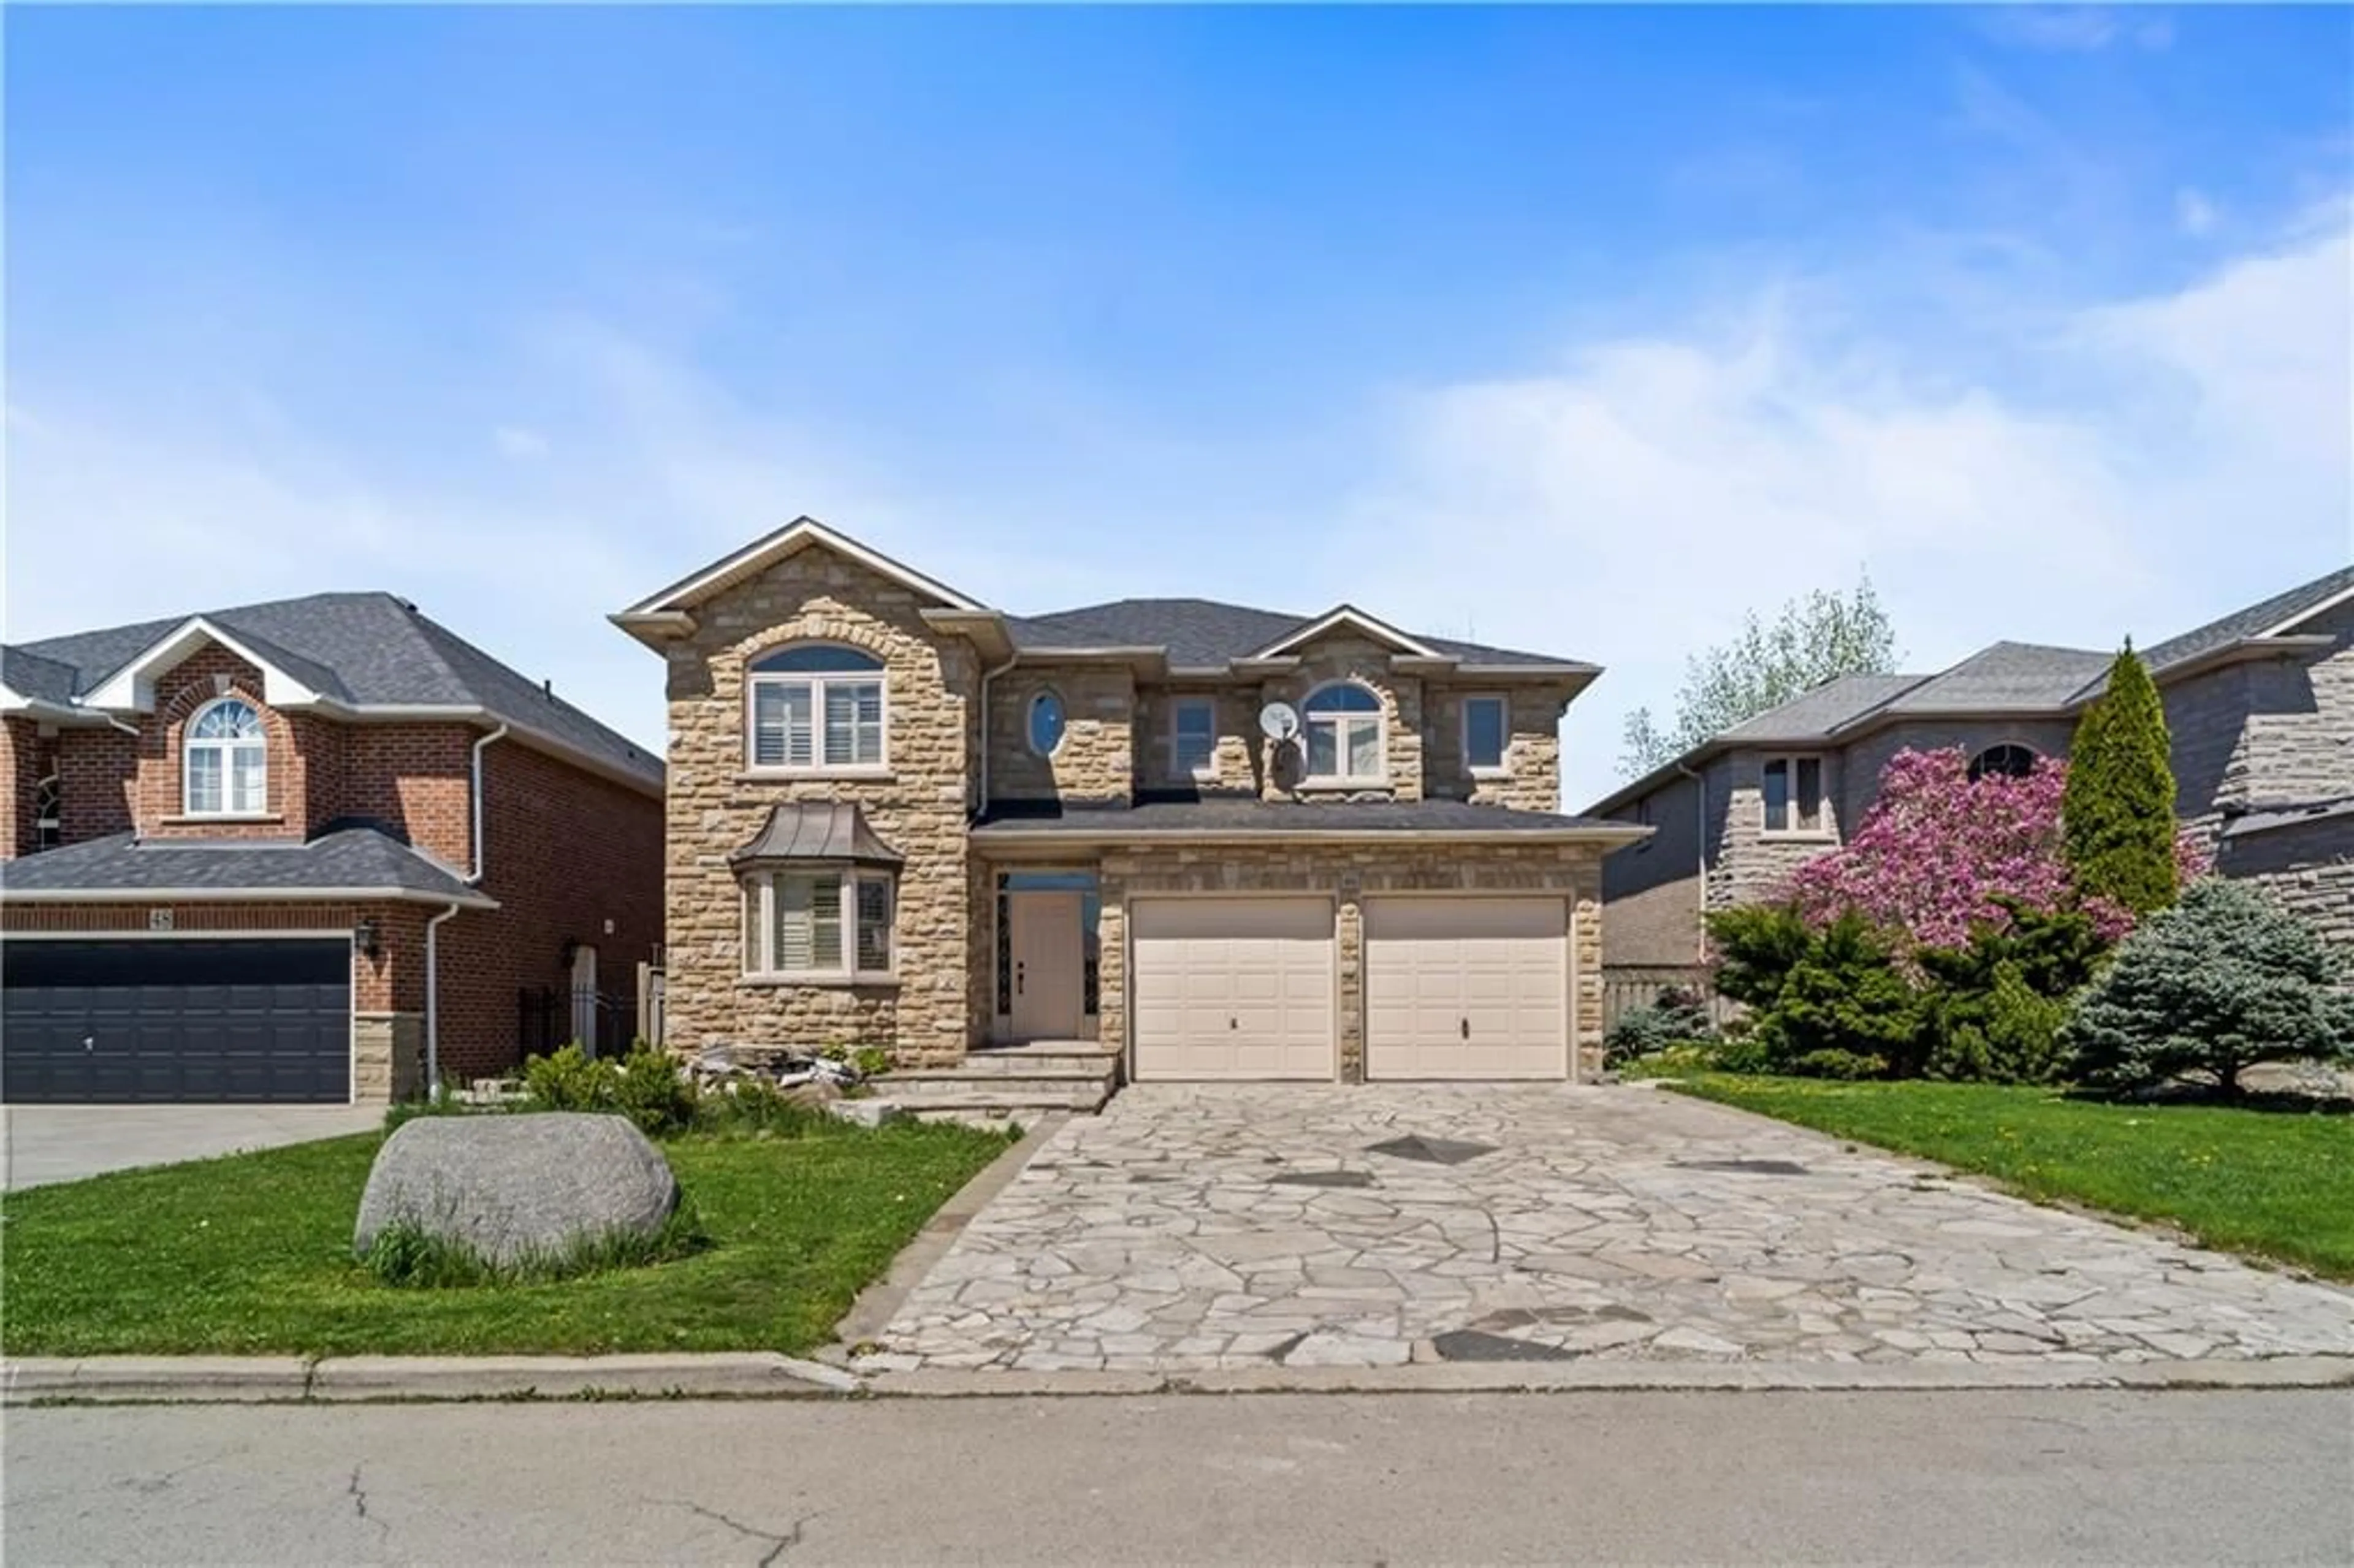 Home with brick exterior material for 44 Davis Cres, Hamilton Ontario L8J 3X5